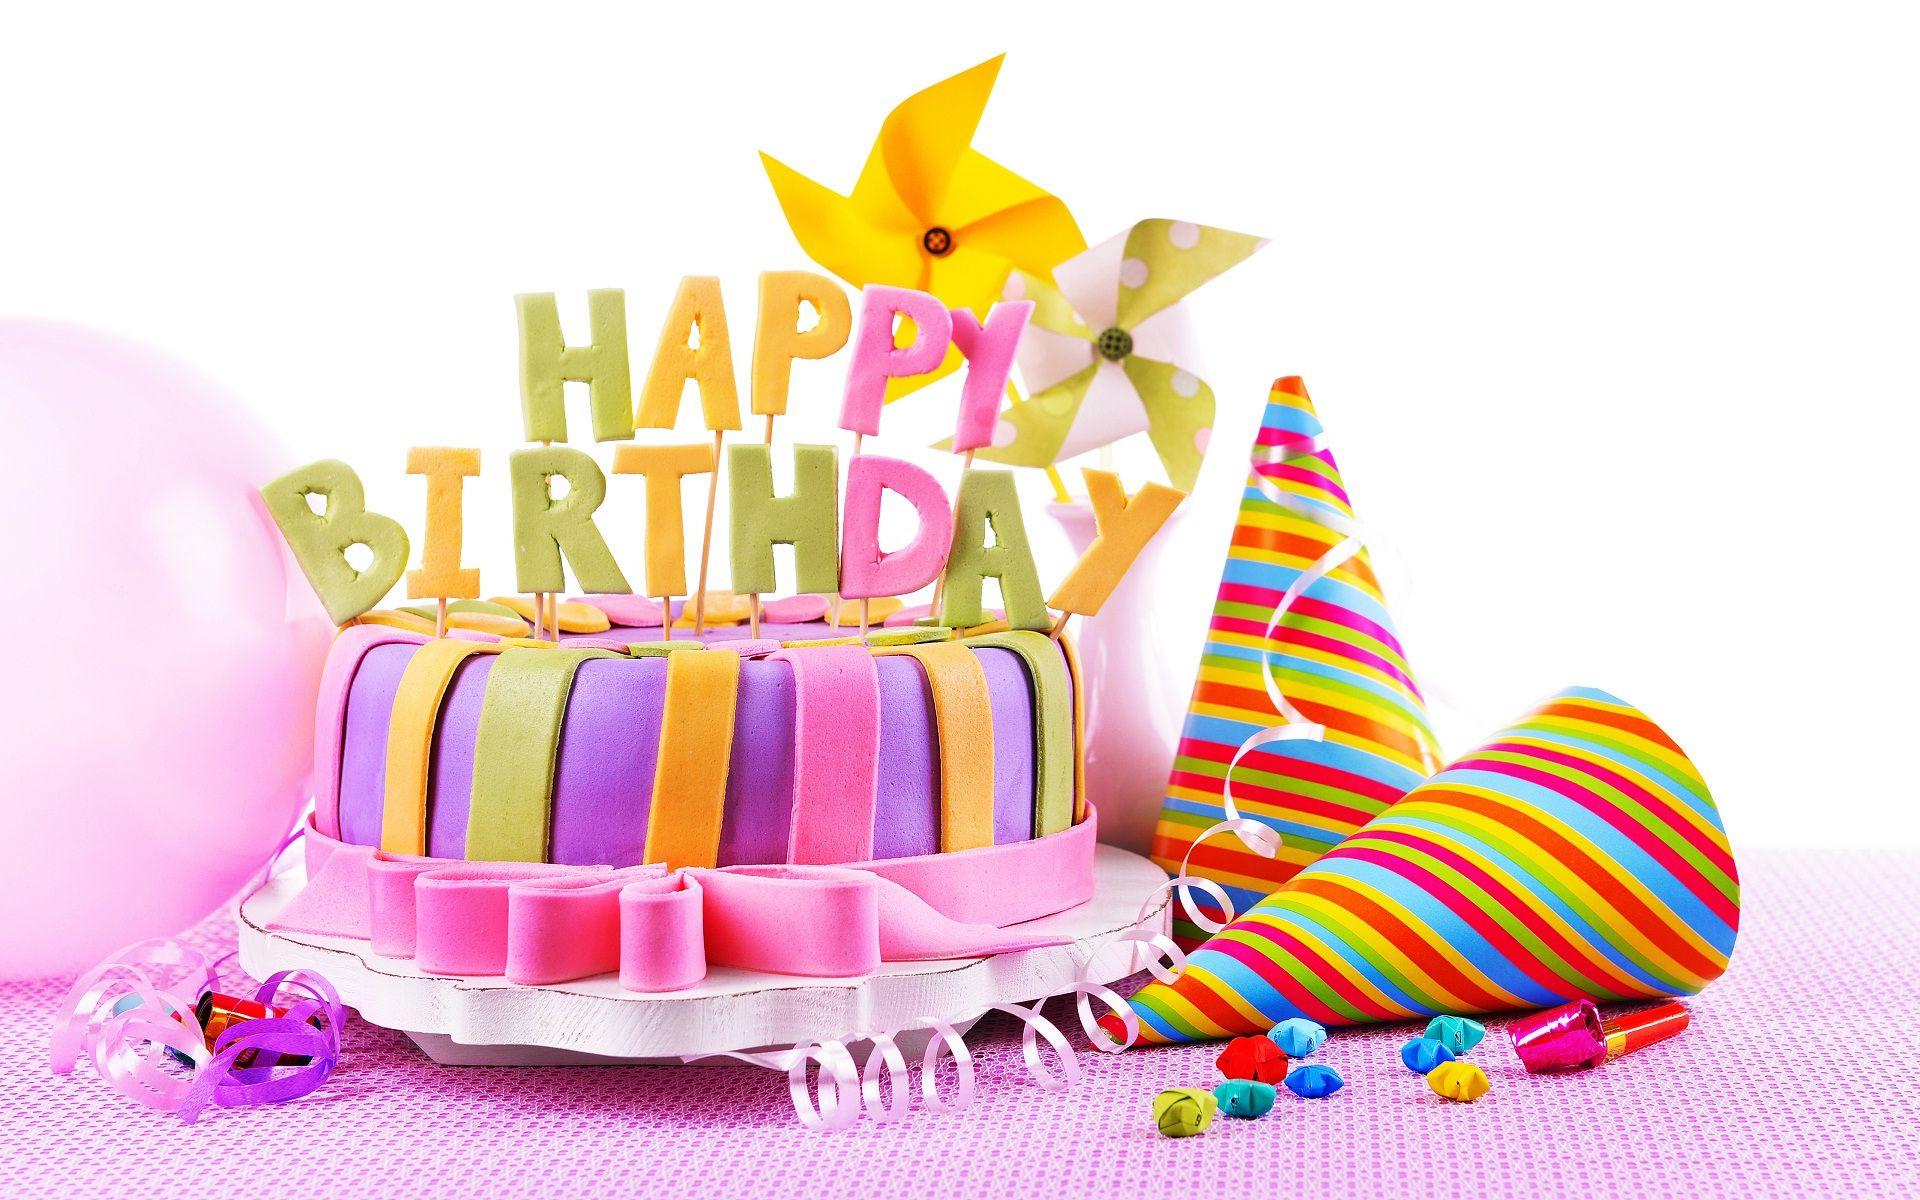 Download Chocolate Birthday Cake Wallpaper Happy Birthday Cake Image